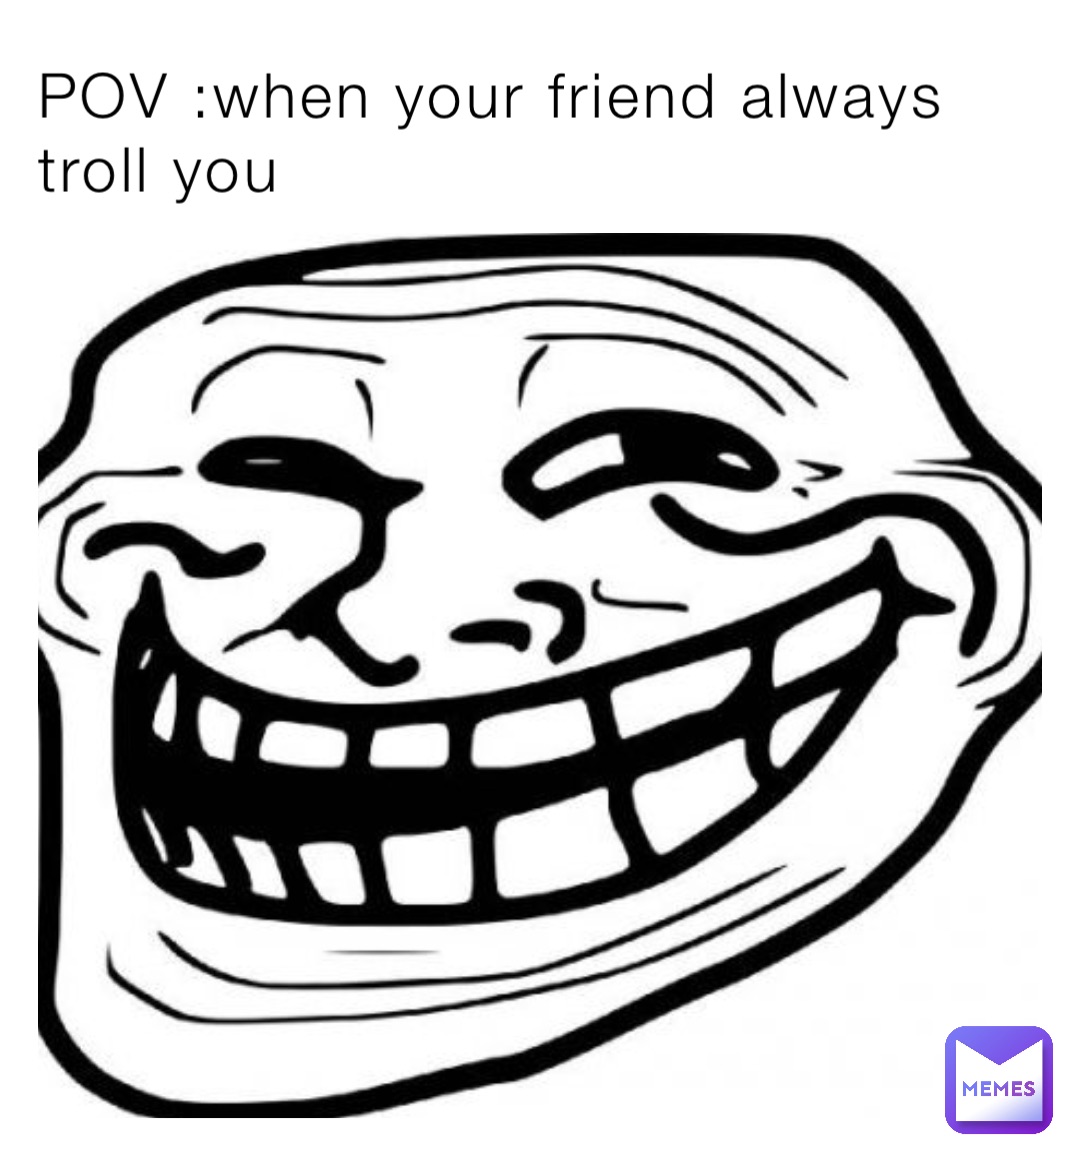 POV :when your friend always troll you